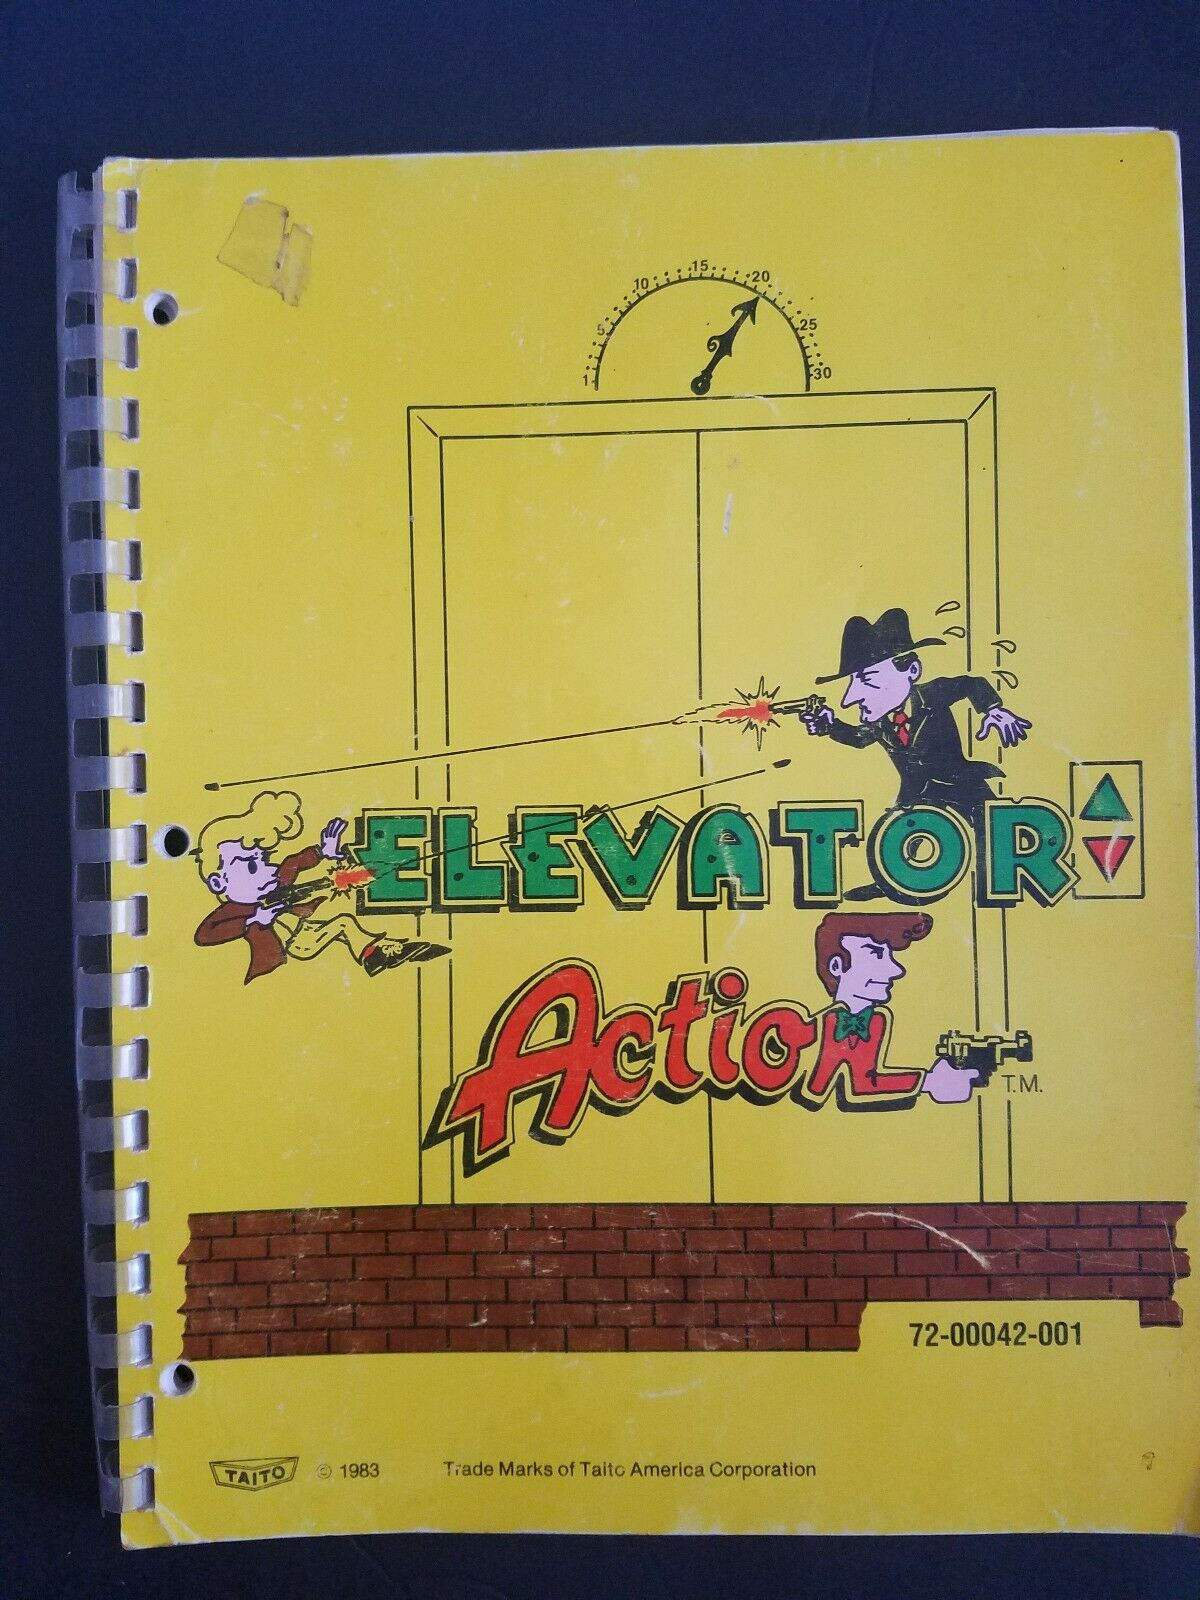 Original Vintage Elevator Action Arcade Game Instruction Manual - Schematics